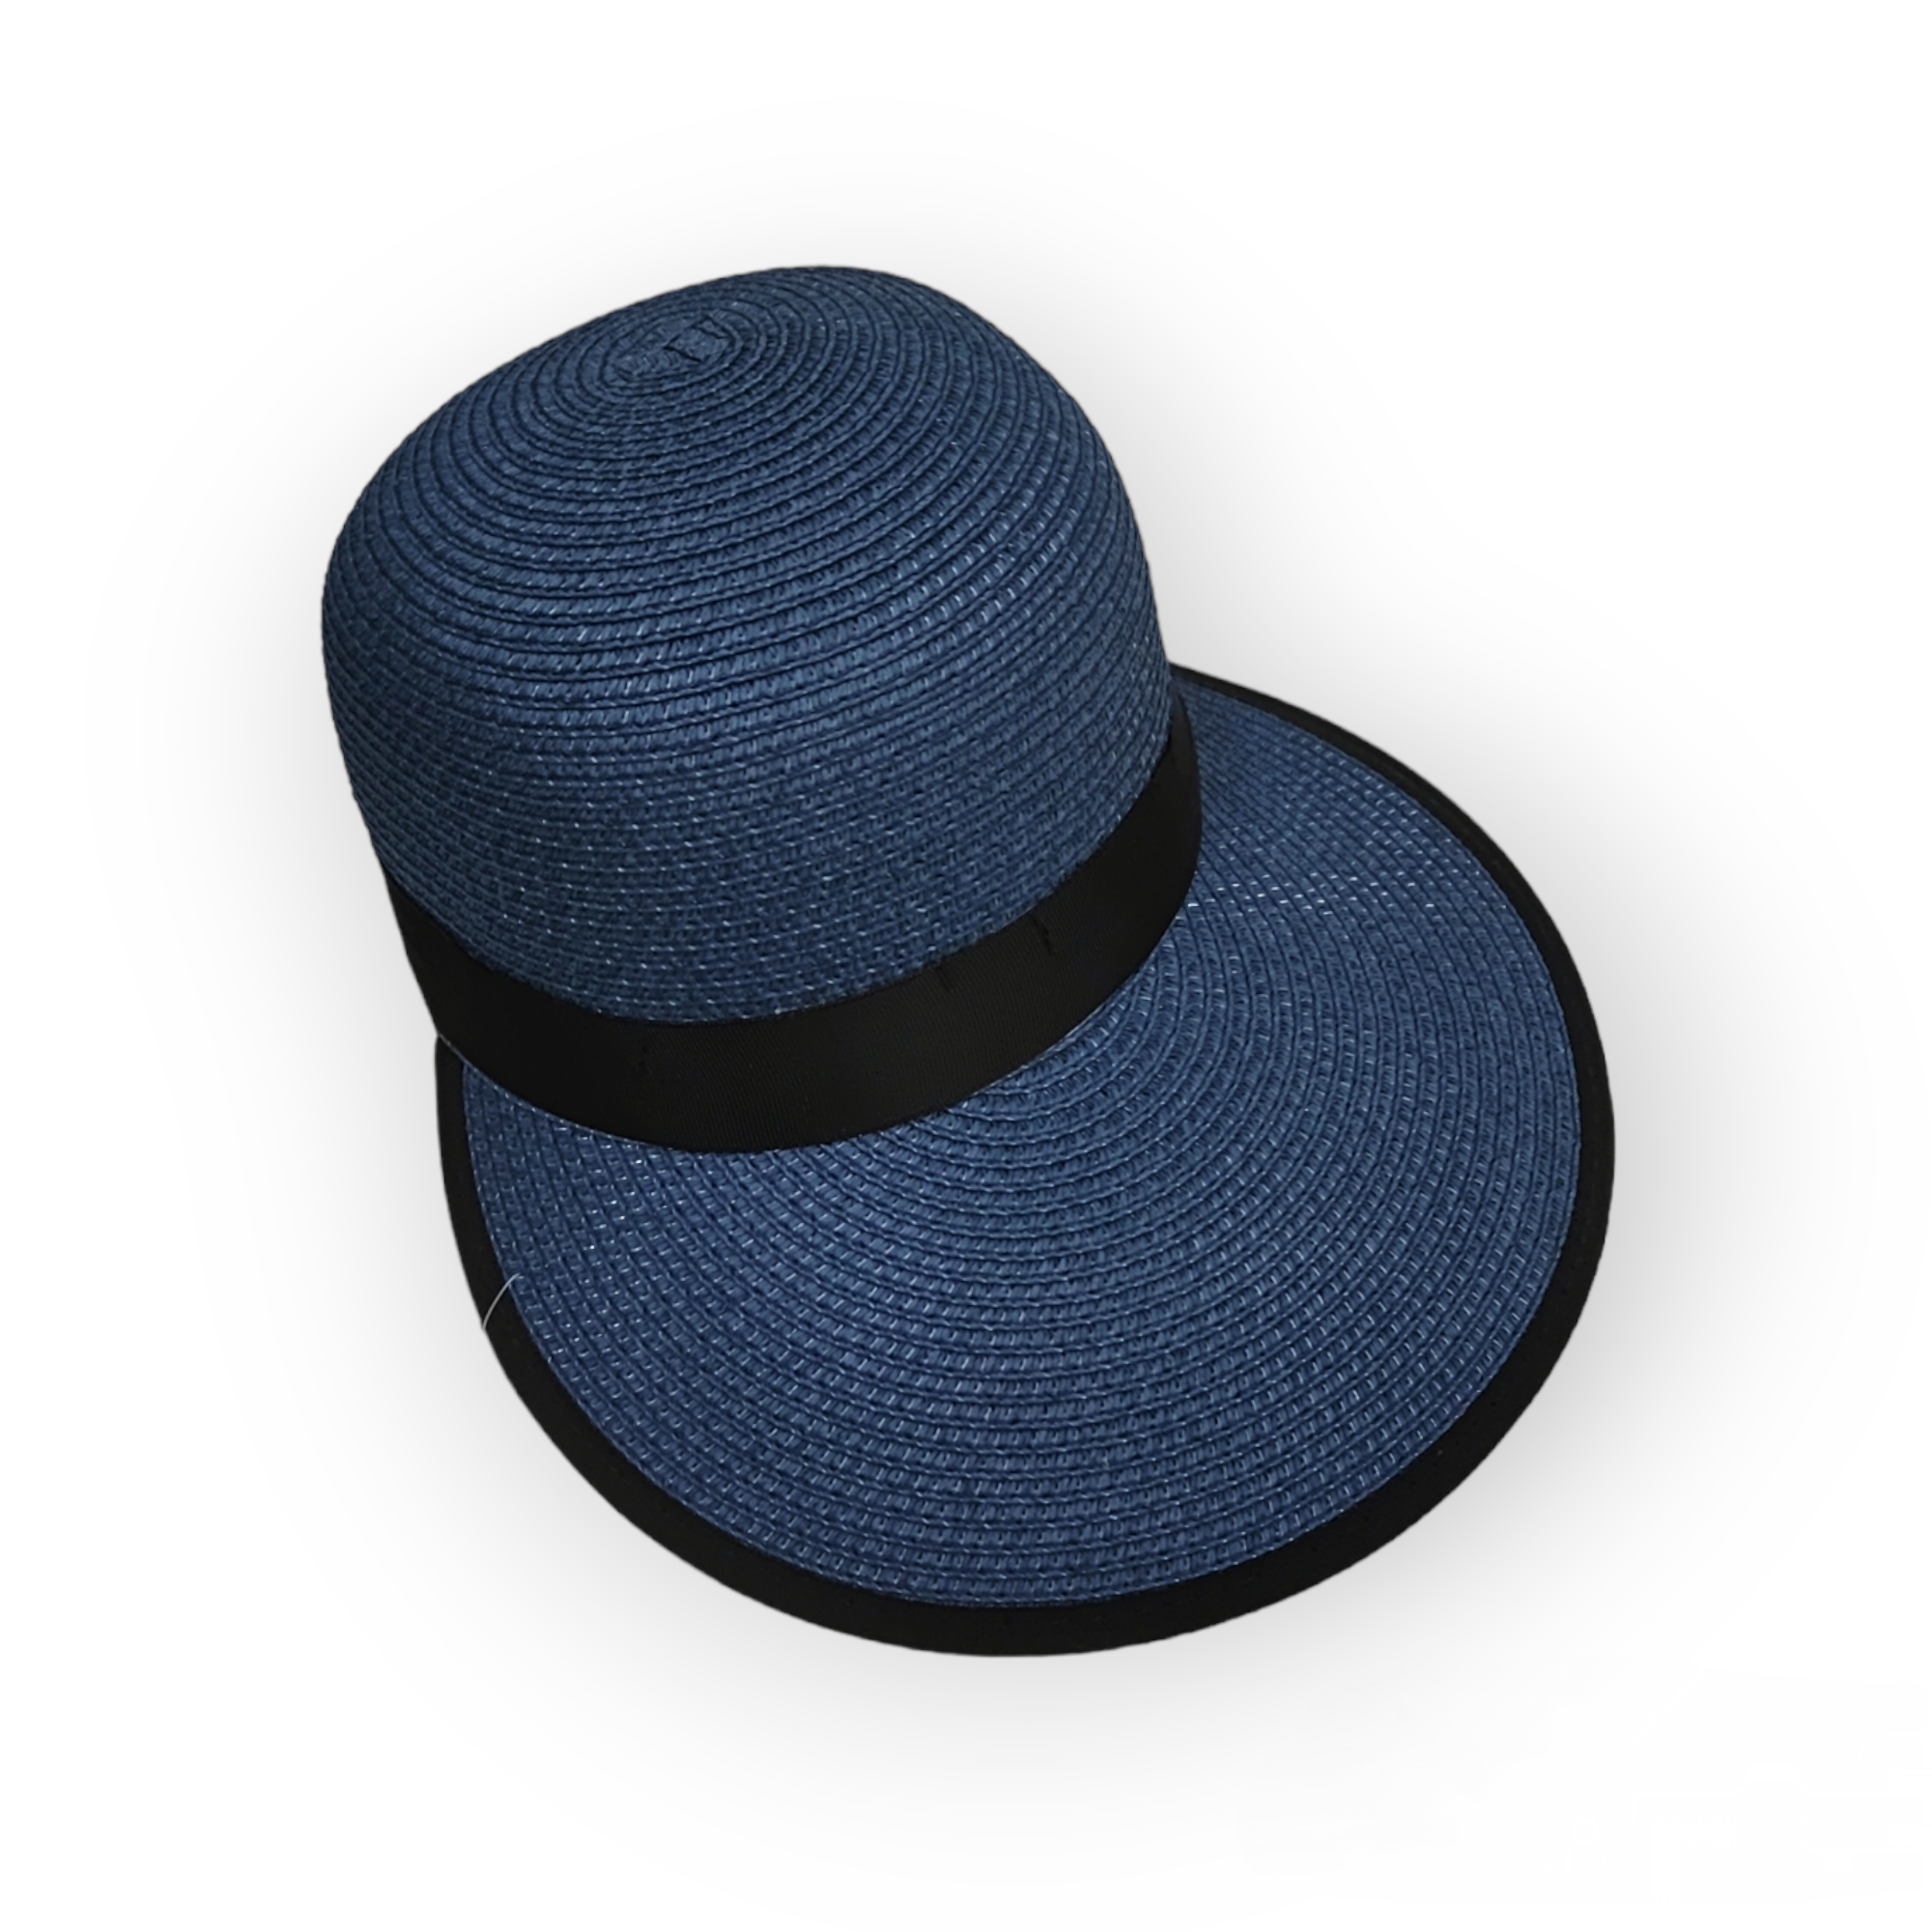 Hat Women's straw cap (x12) #12